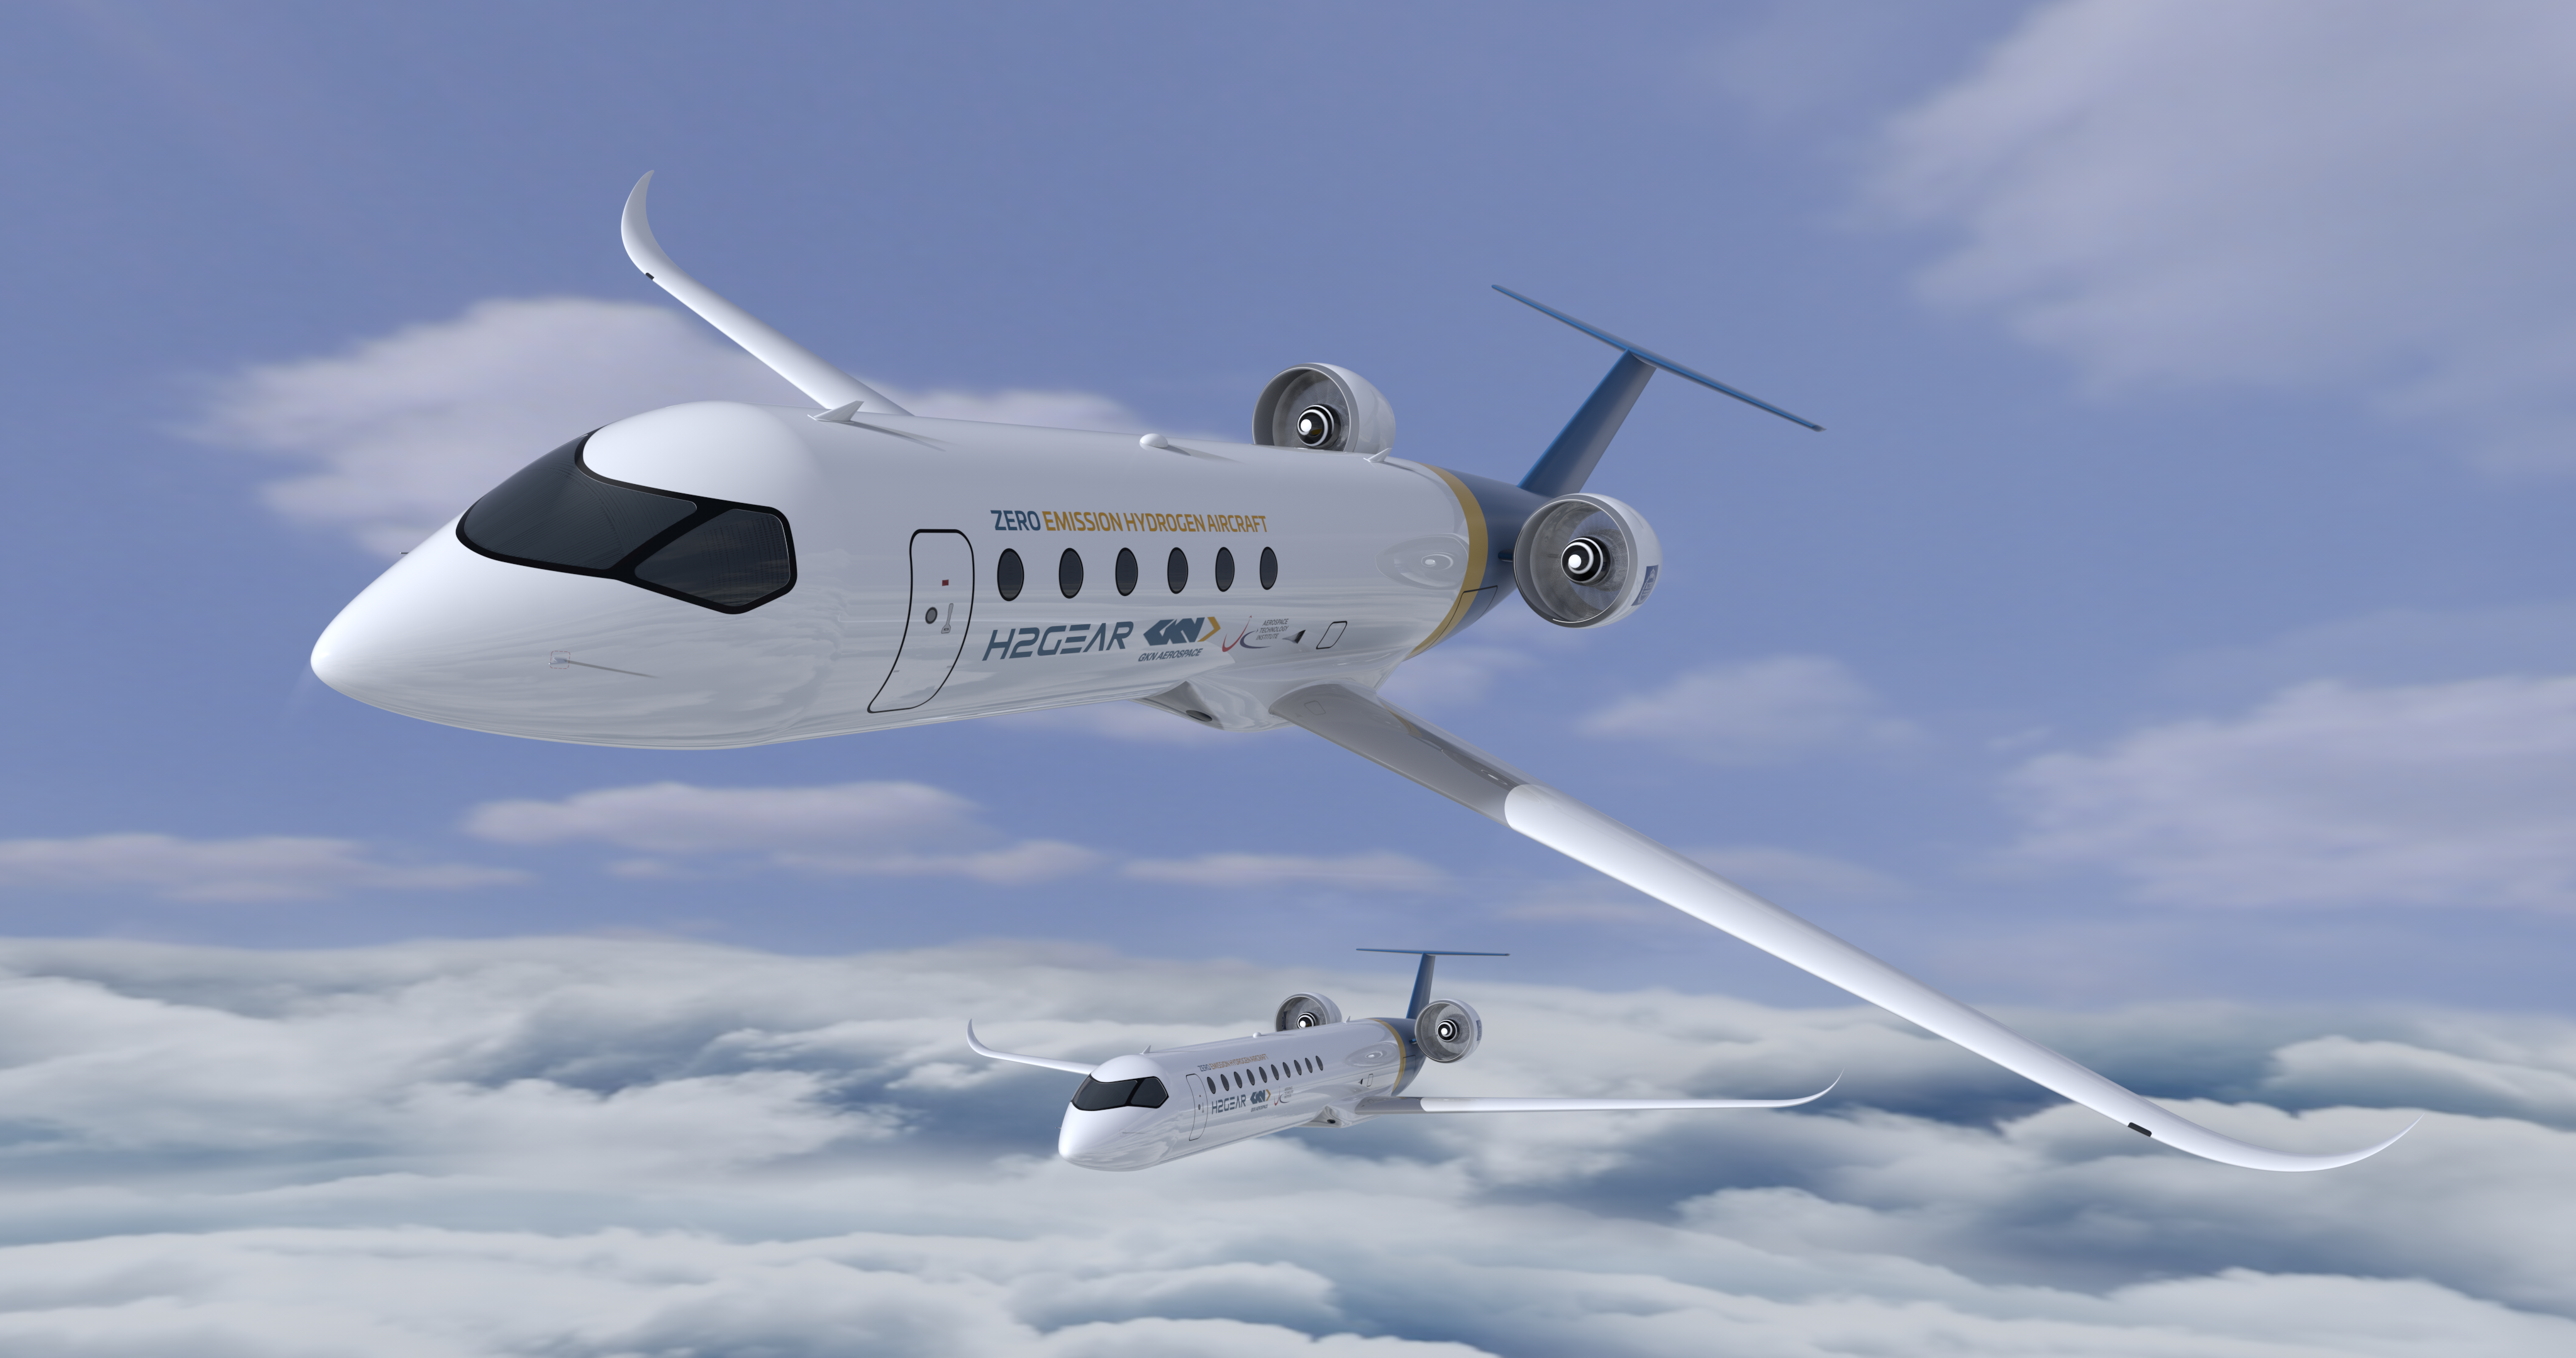 H2GKN aircraft rendering